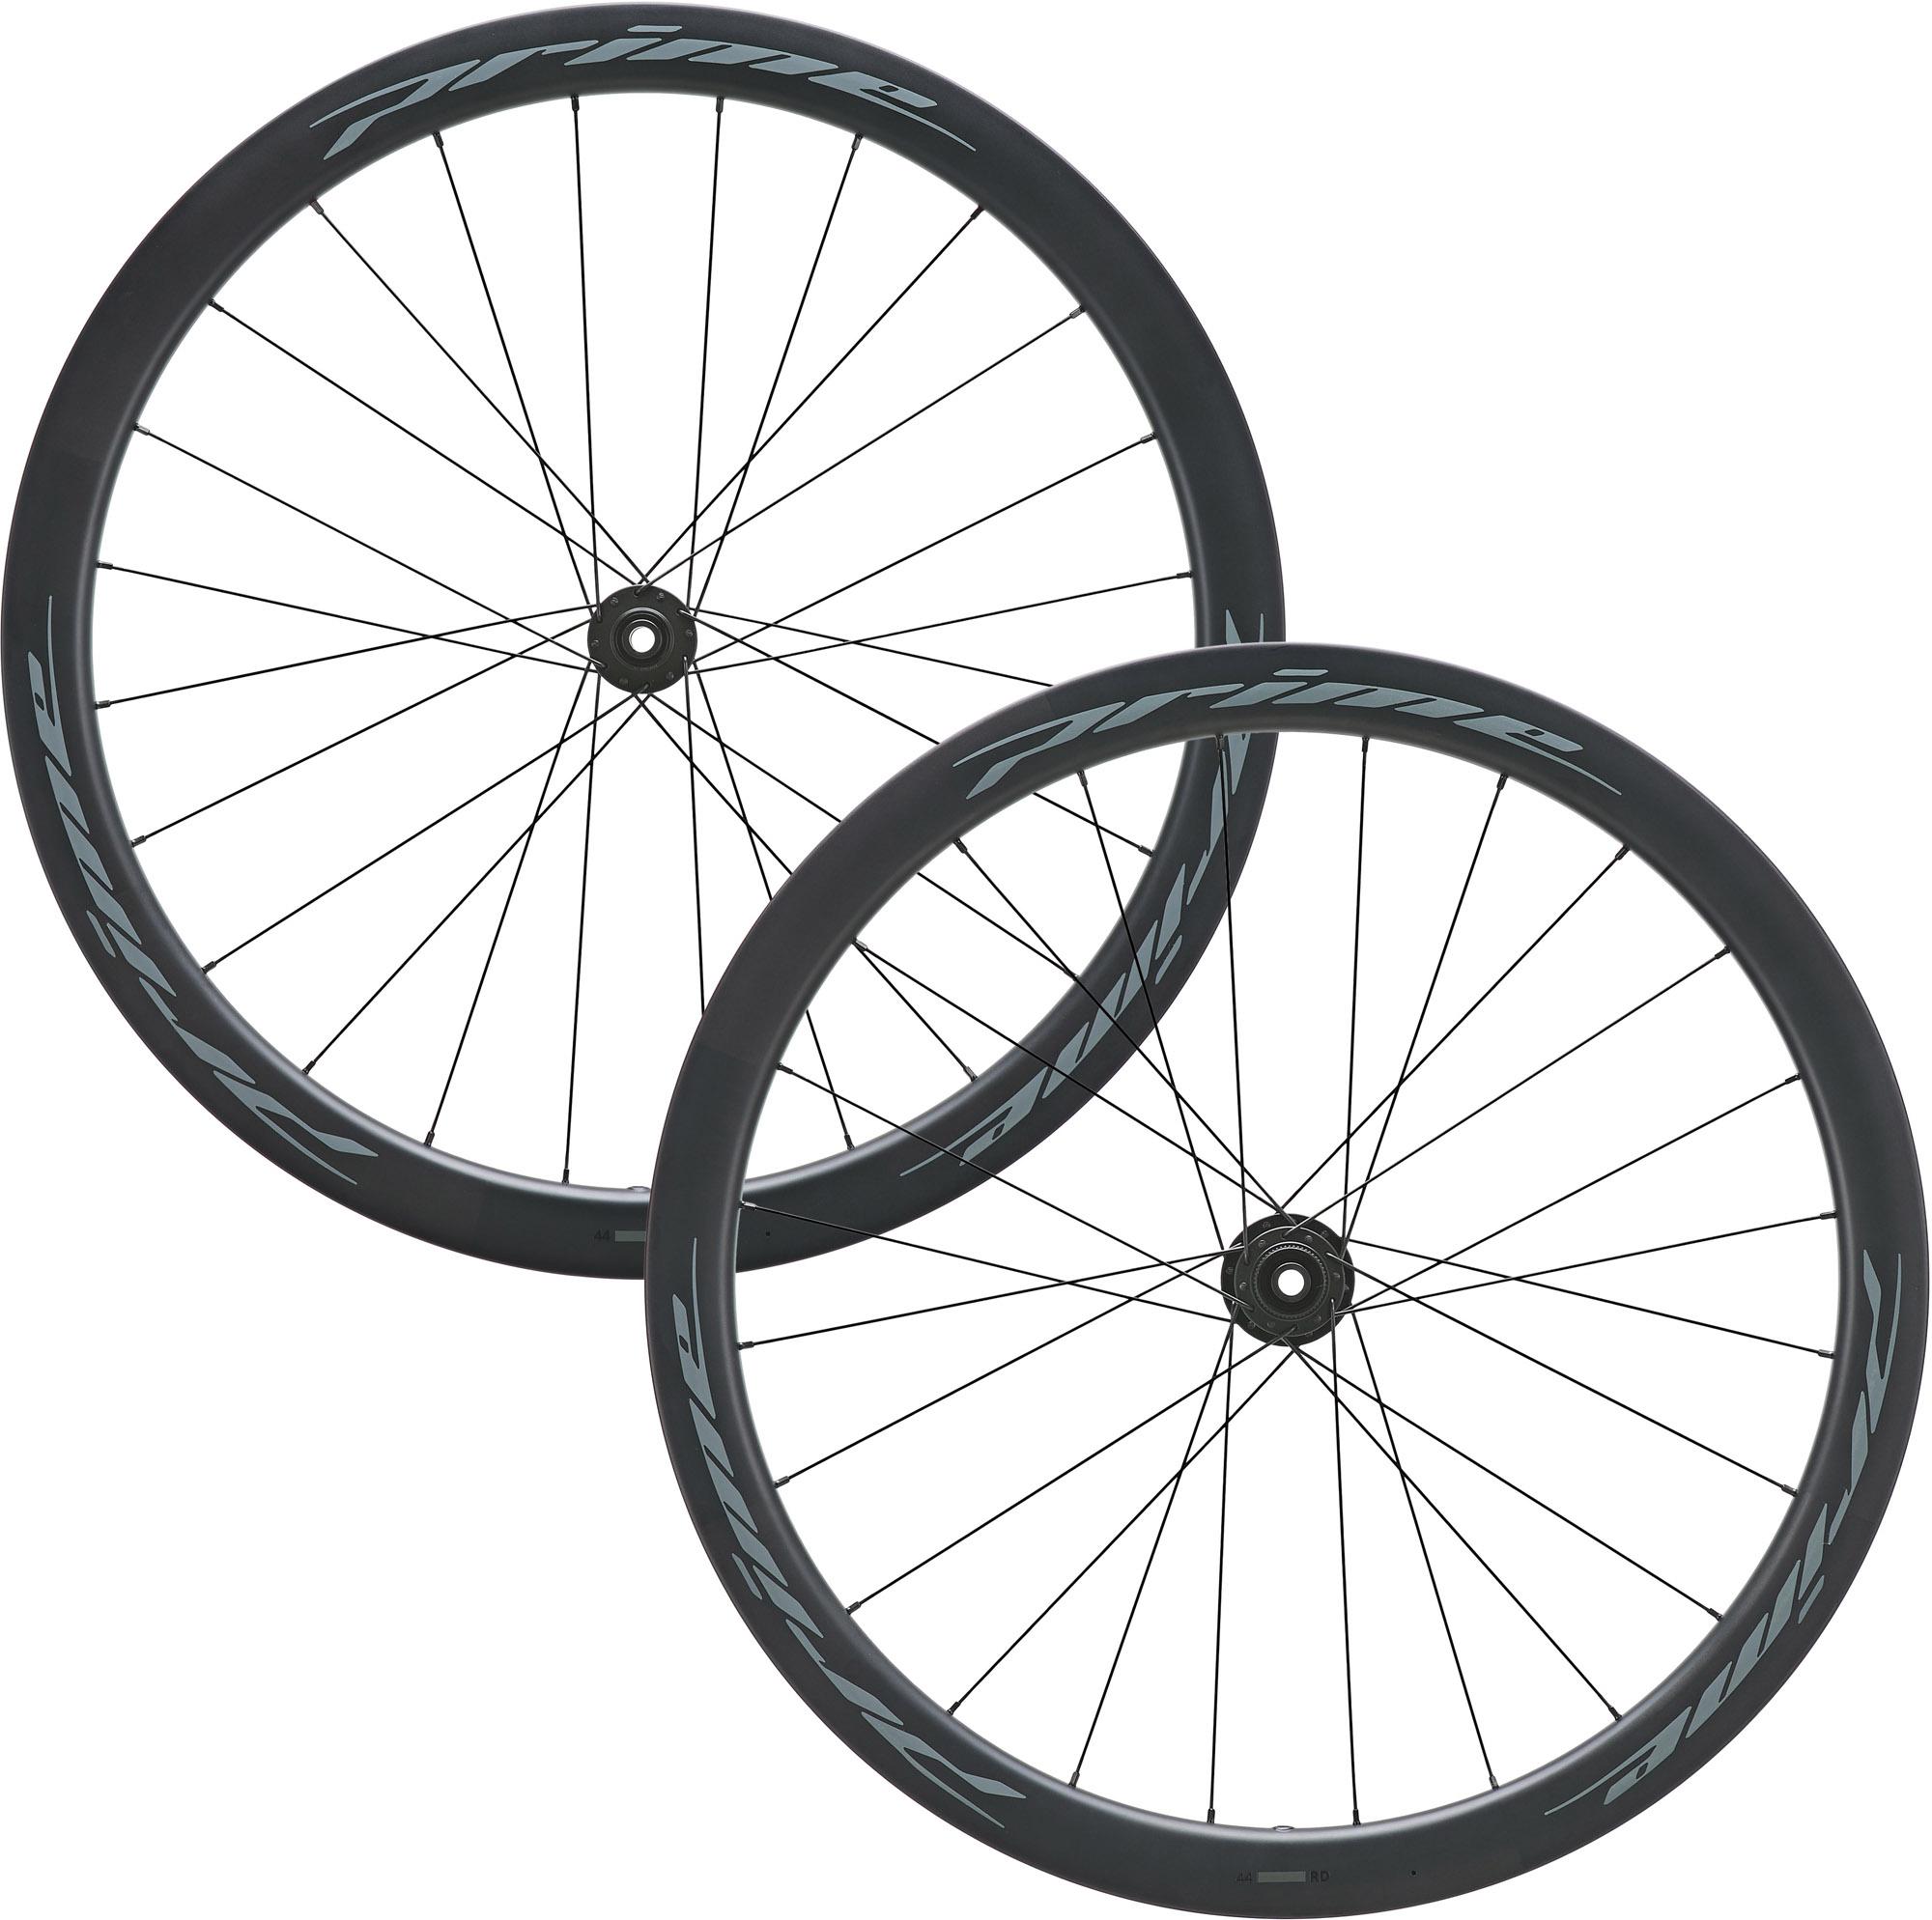 Prime Doyenne 44 Carbon Disc Wheelset - Black